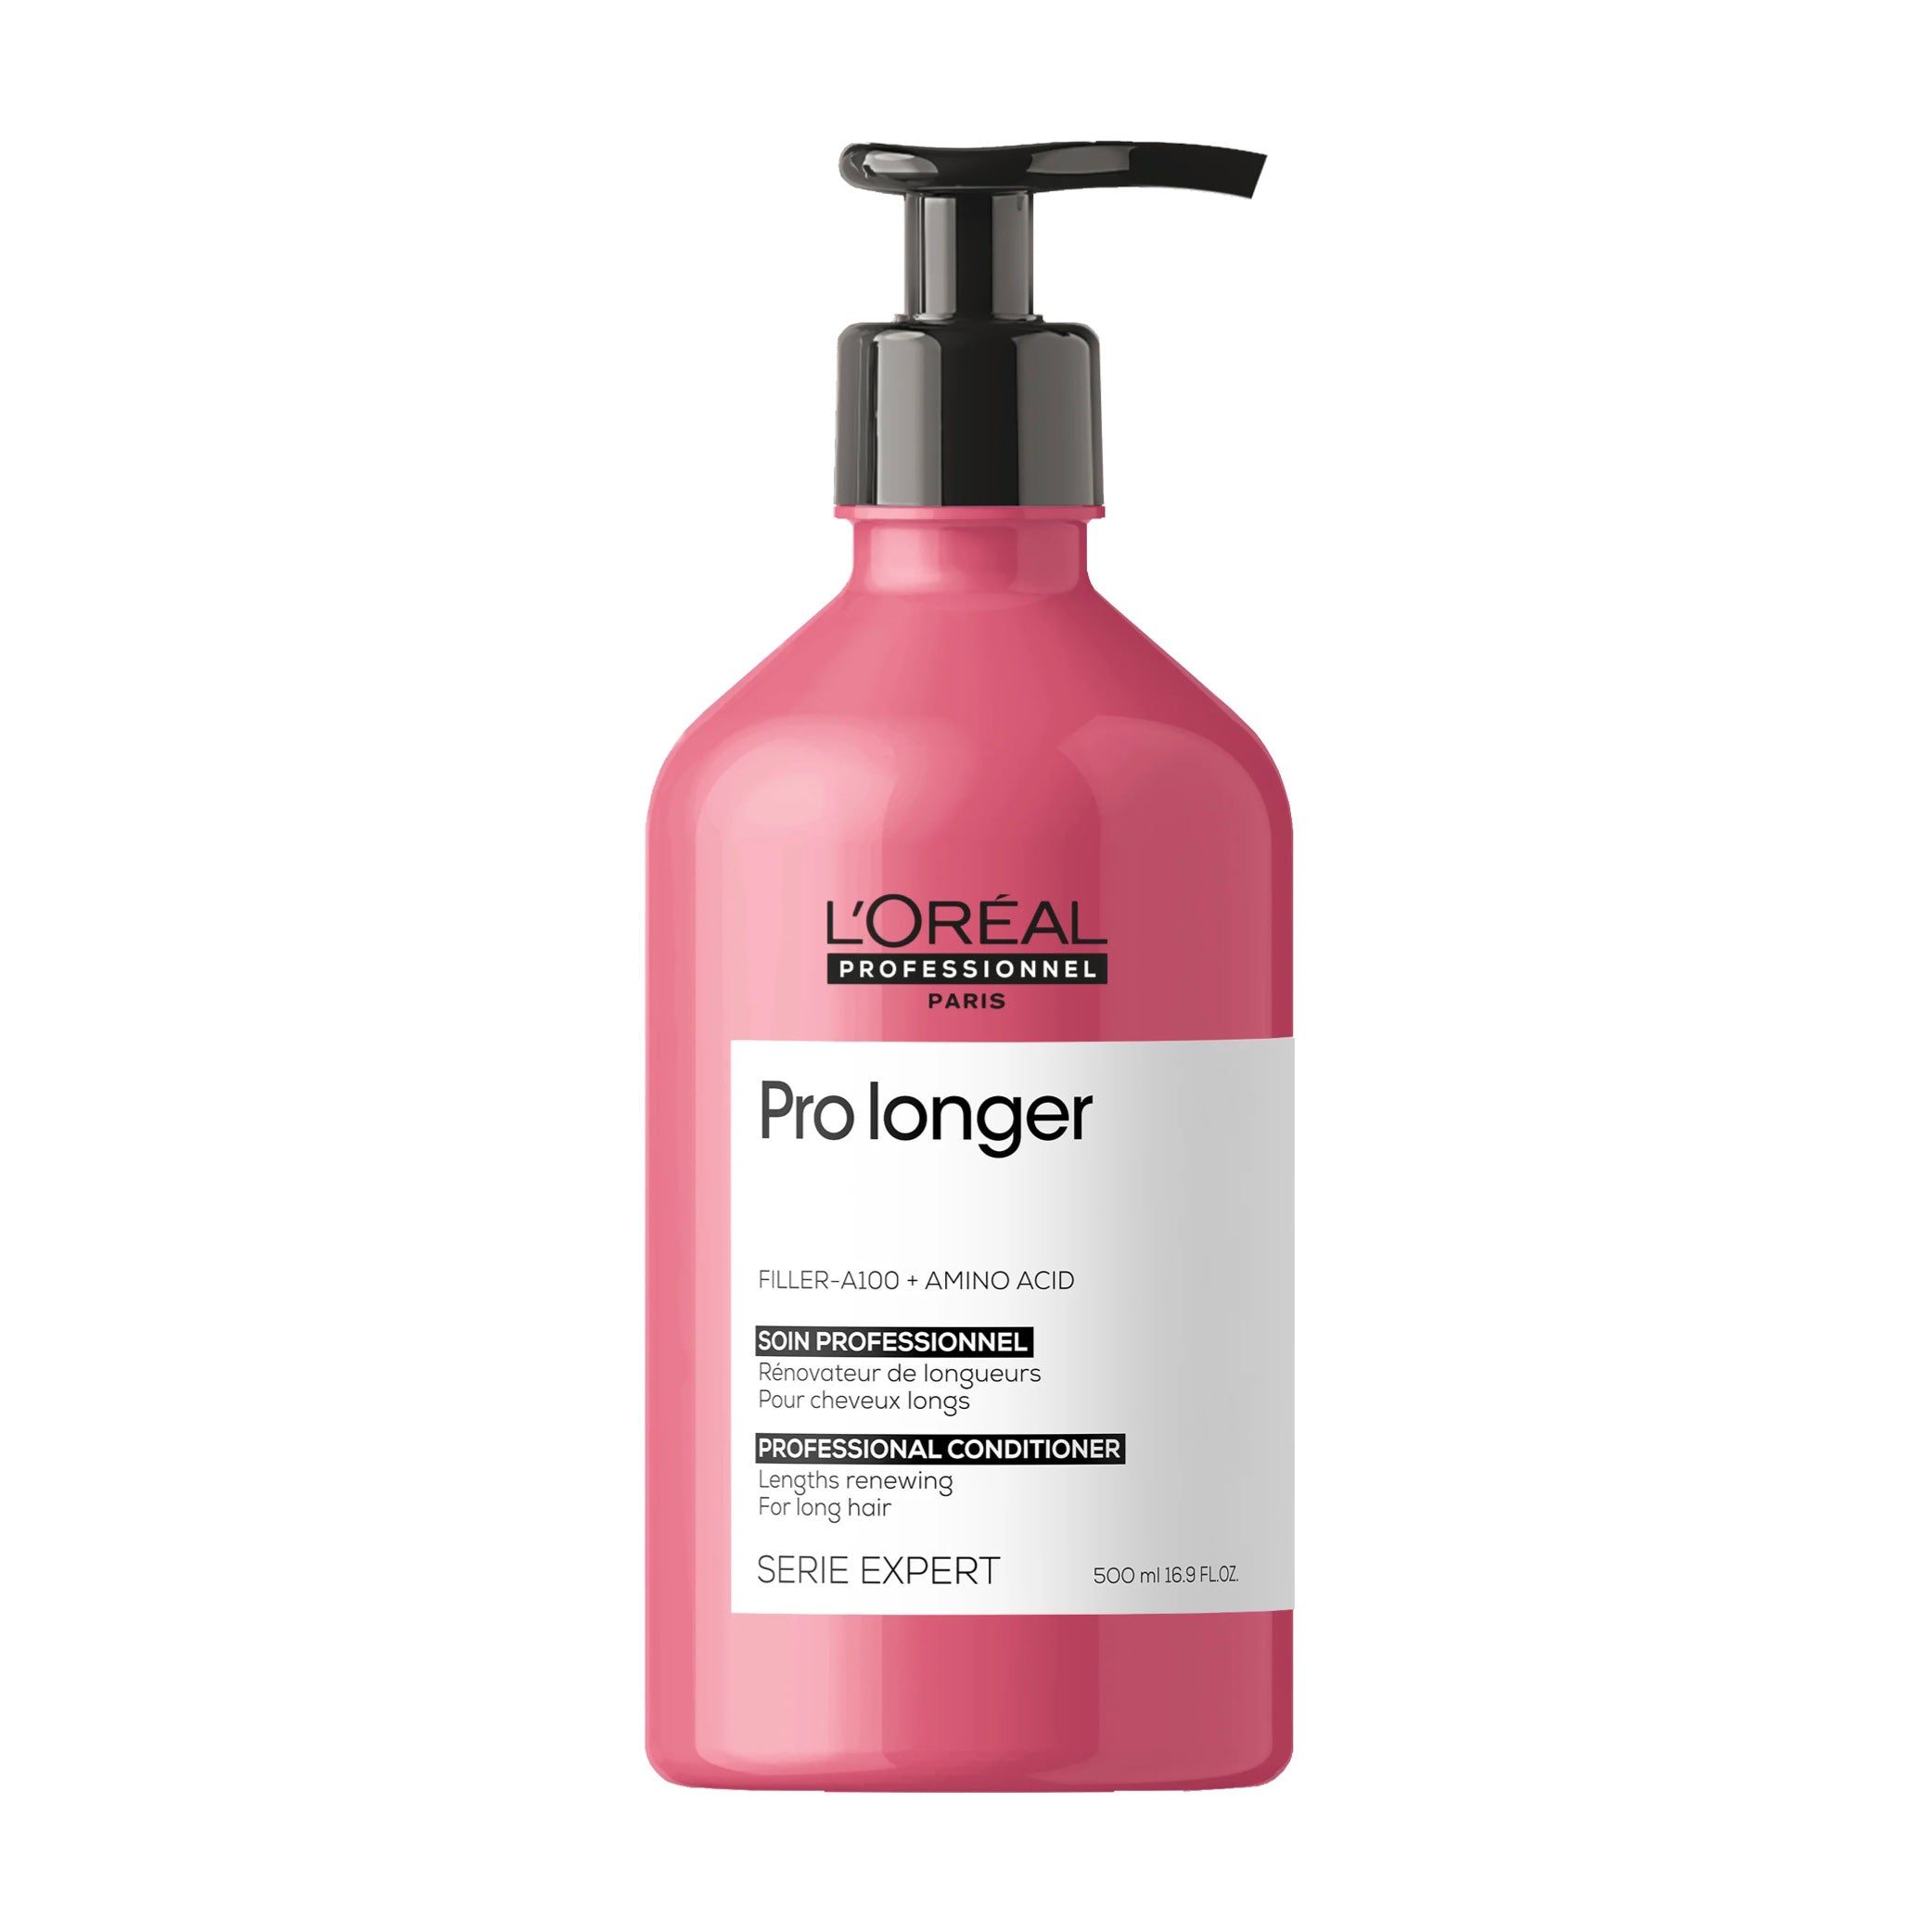 Pro Longer après-shampoing